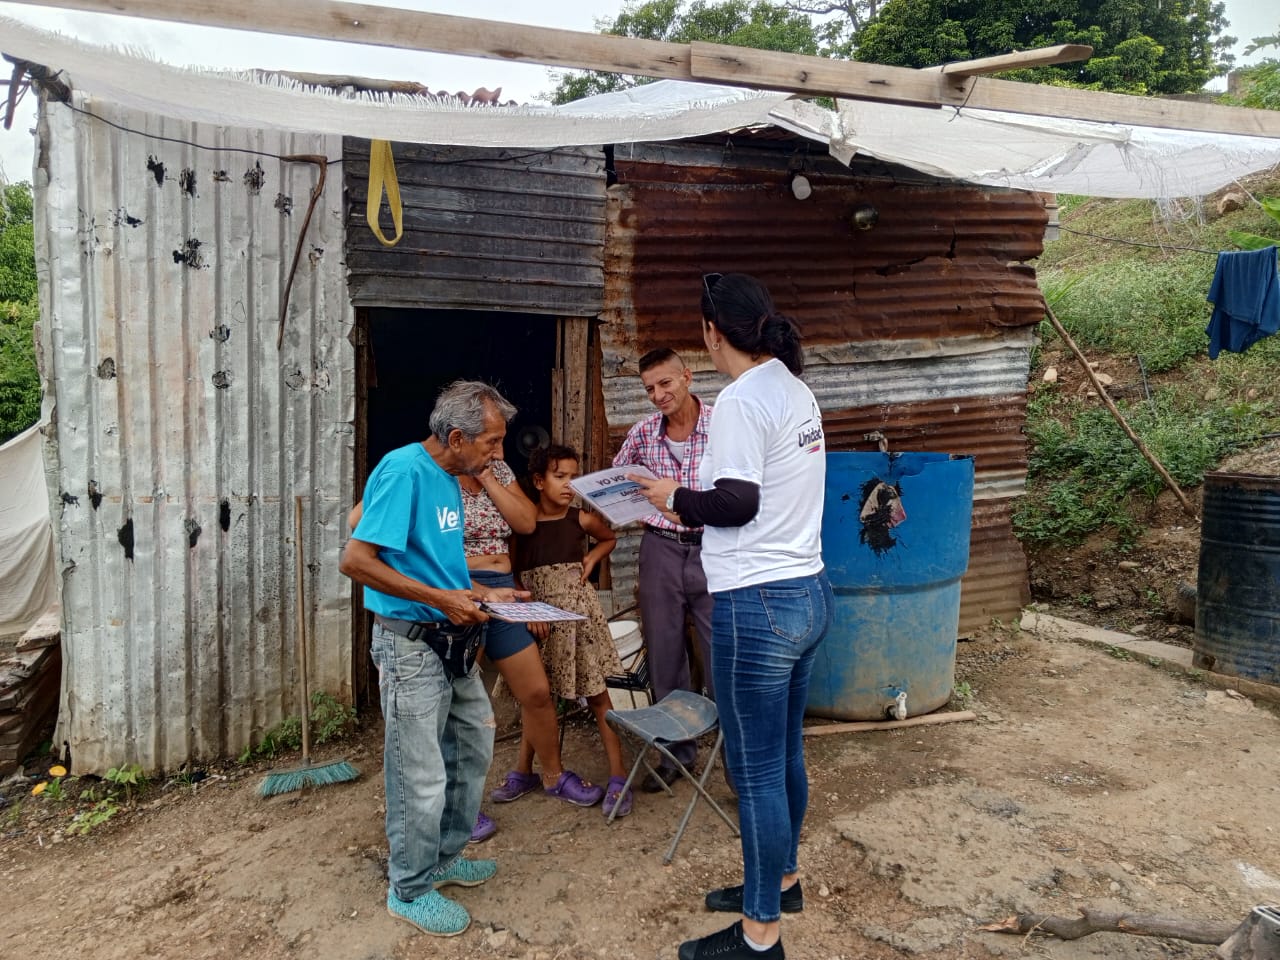 “Casa por casa”, Encuentro Ciudadano recorrió Valera enseñando a votar por Edmundo González